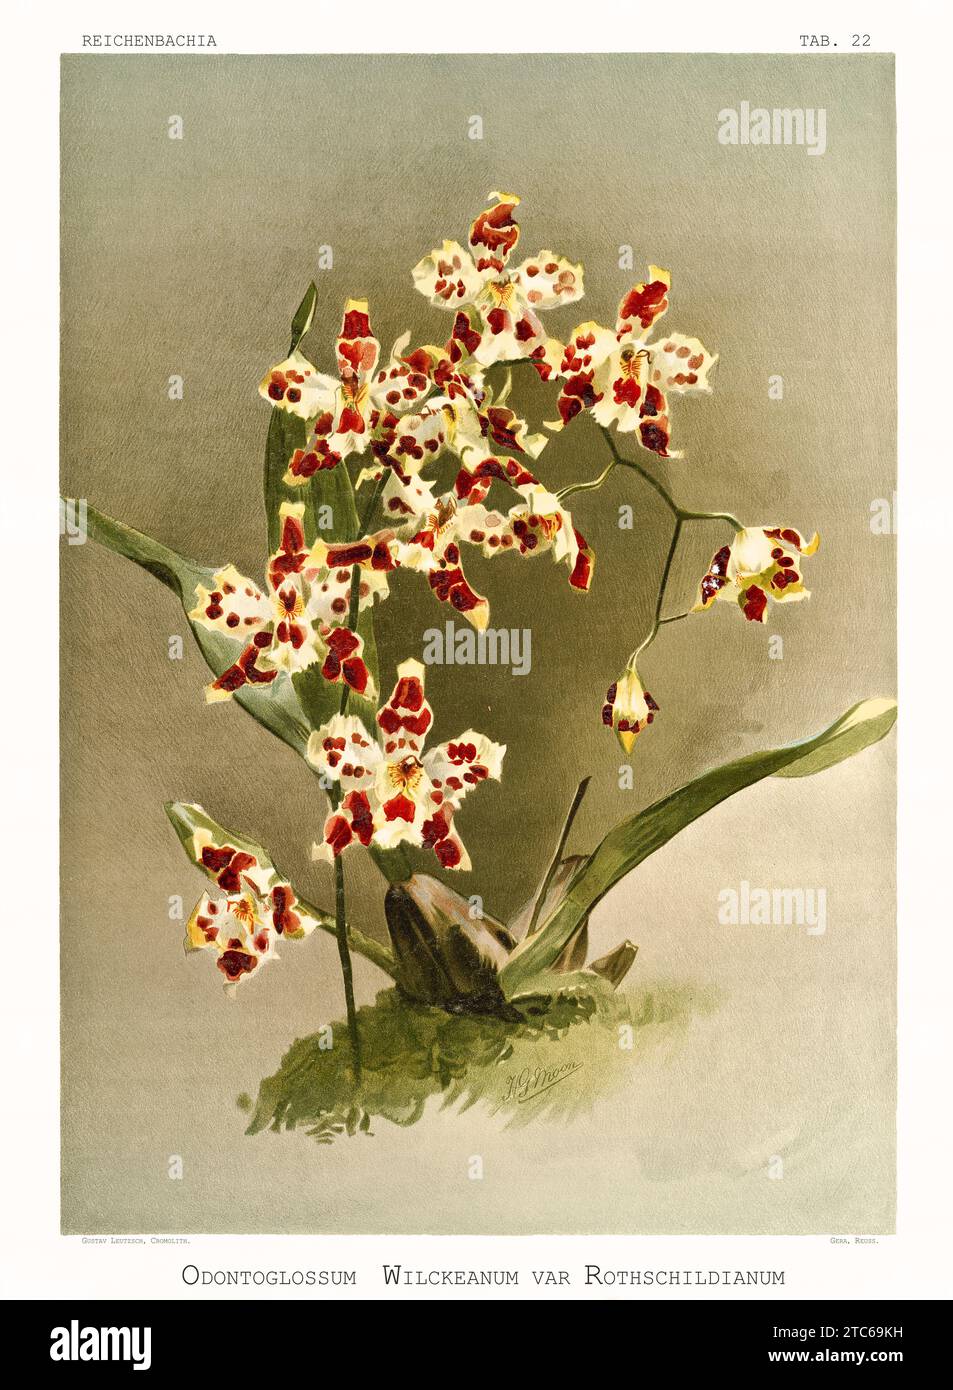 Old illustration of  Oncidium x wilckeanum. Reichenbachia, by F. Sander. St. Albans, UK, 1888 - 1894 Stock Photo